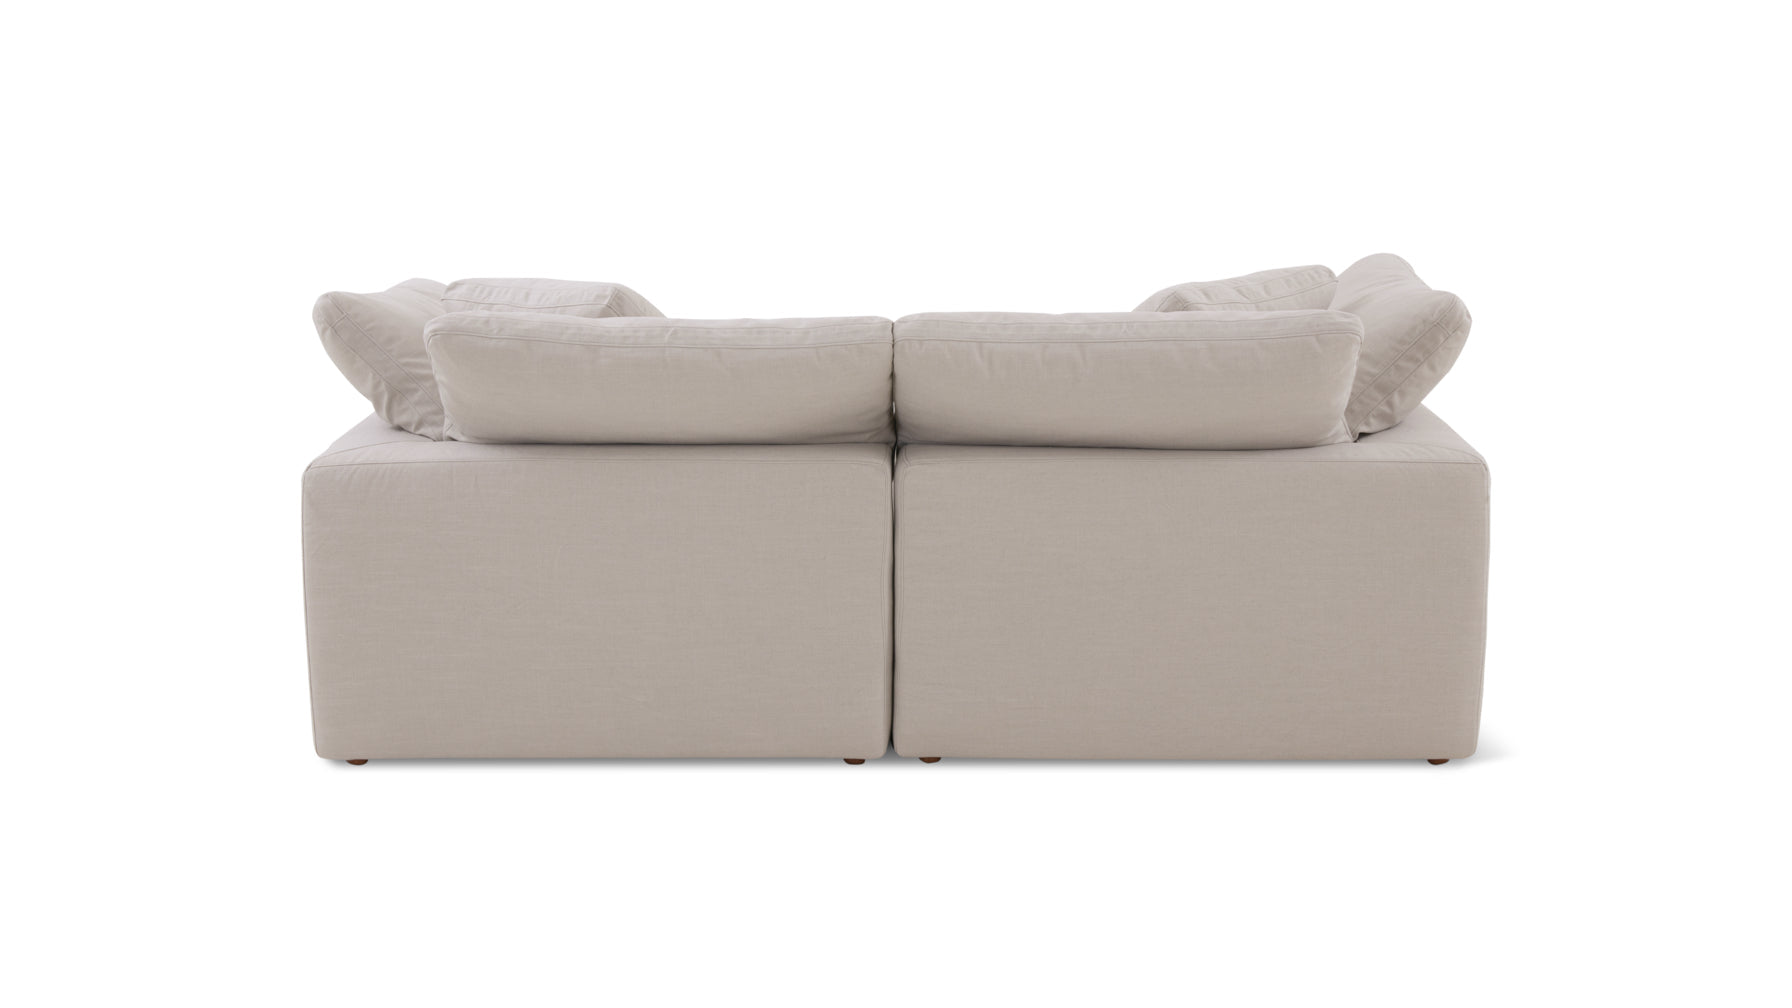 Movie Night™ 2-Piece Modular Sofa, Standard, Clay - Image 8